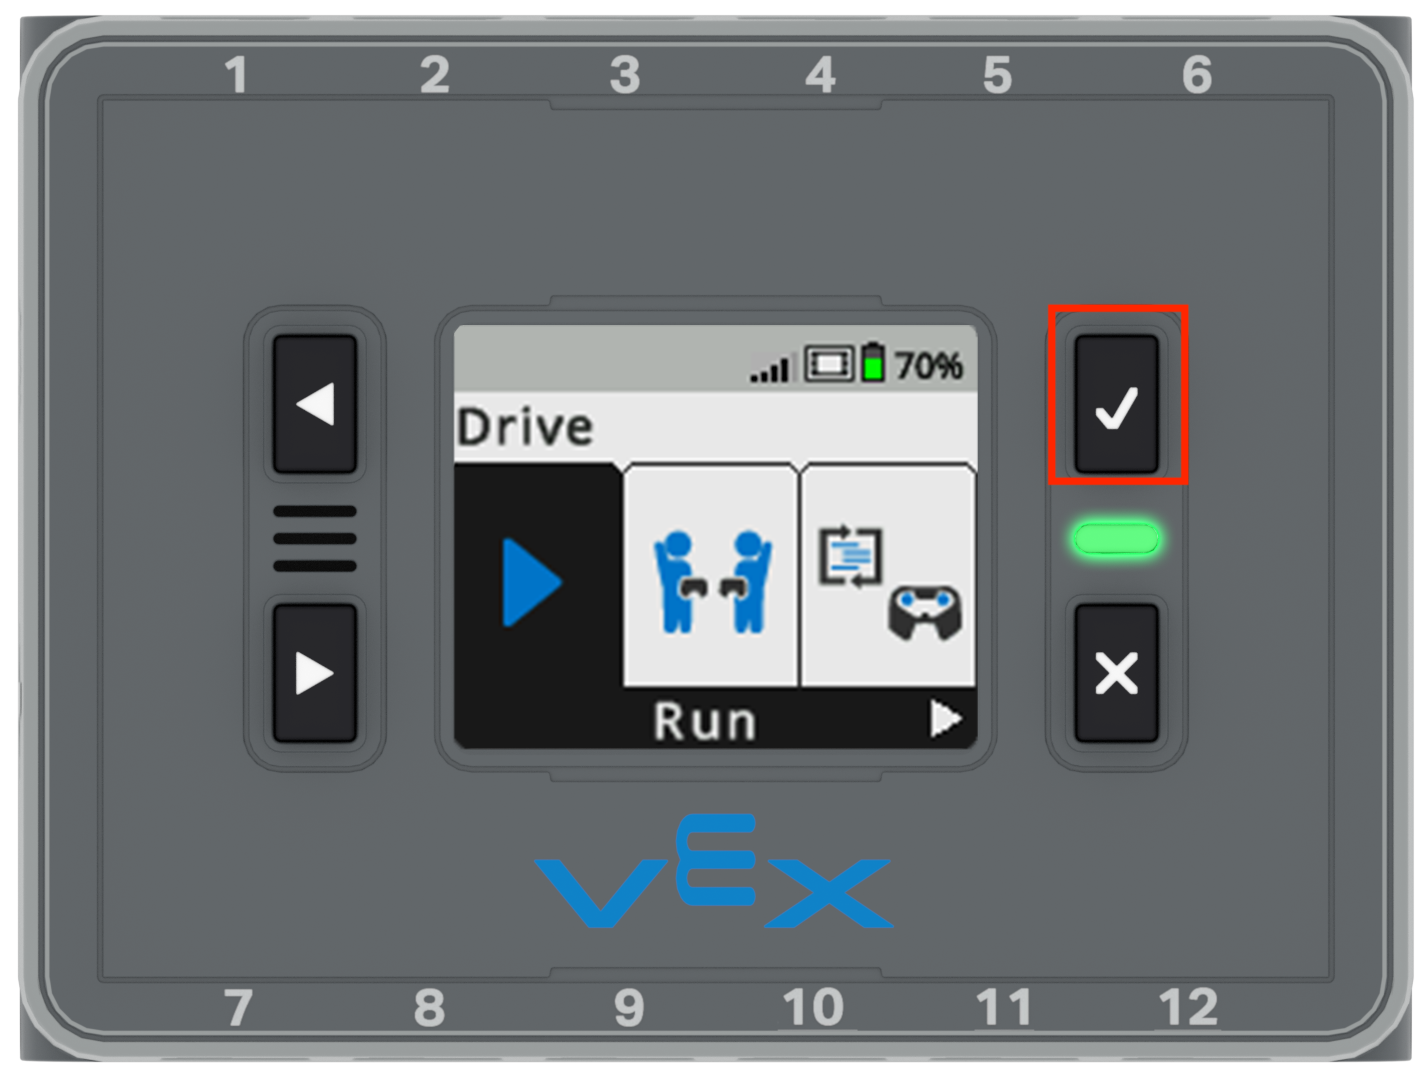 IQ Brain screen selecting the Run button for the Driver Control program